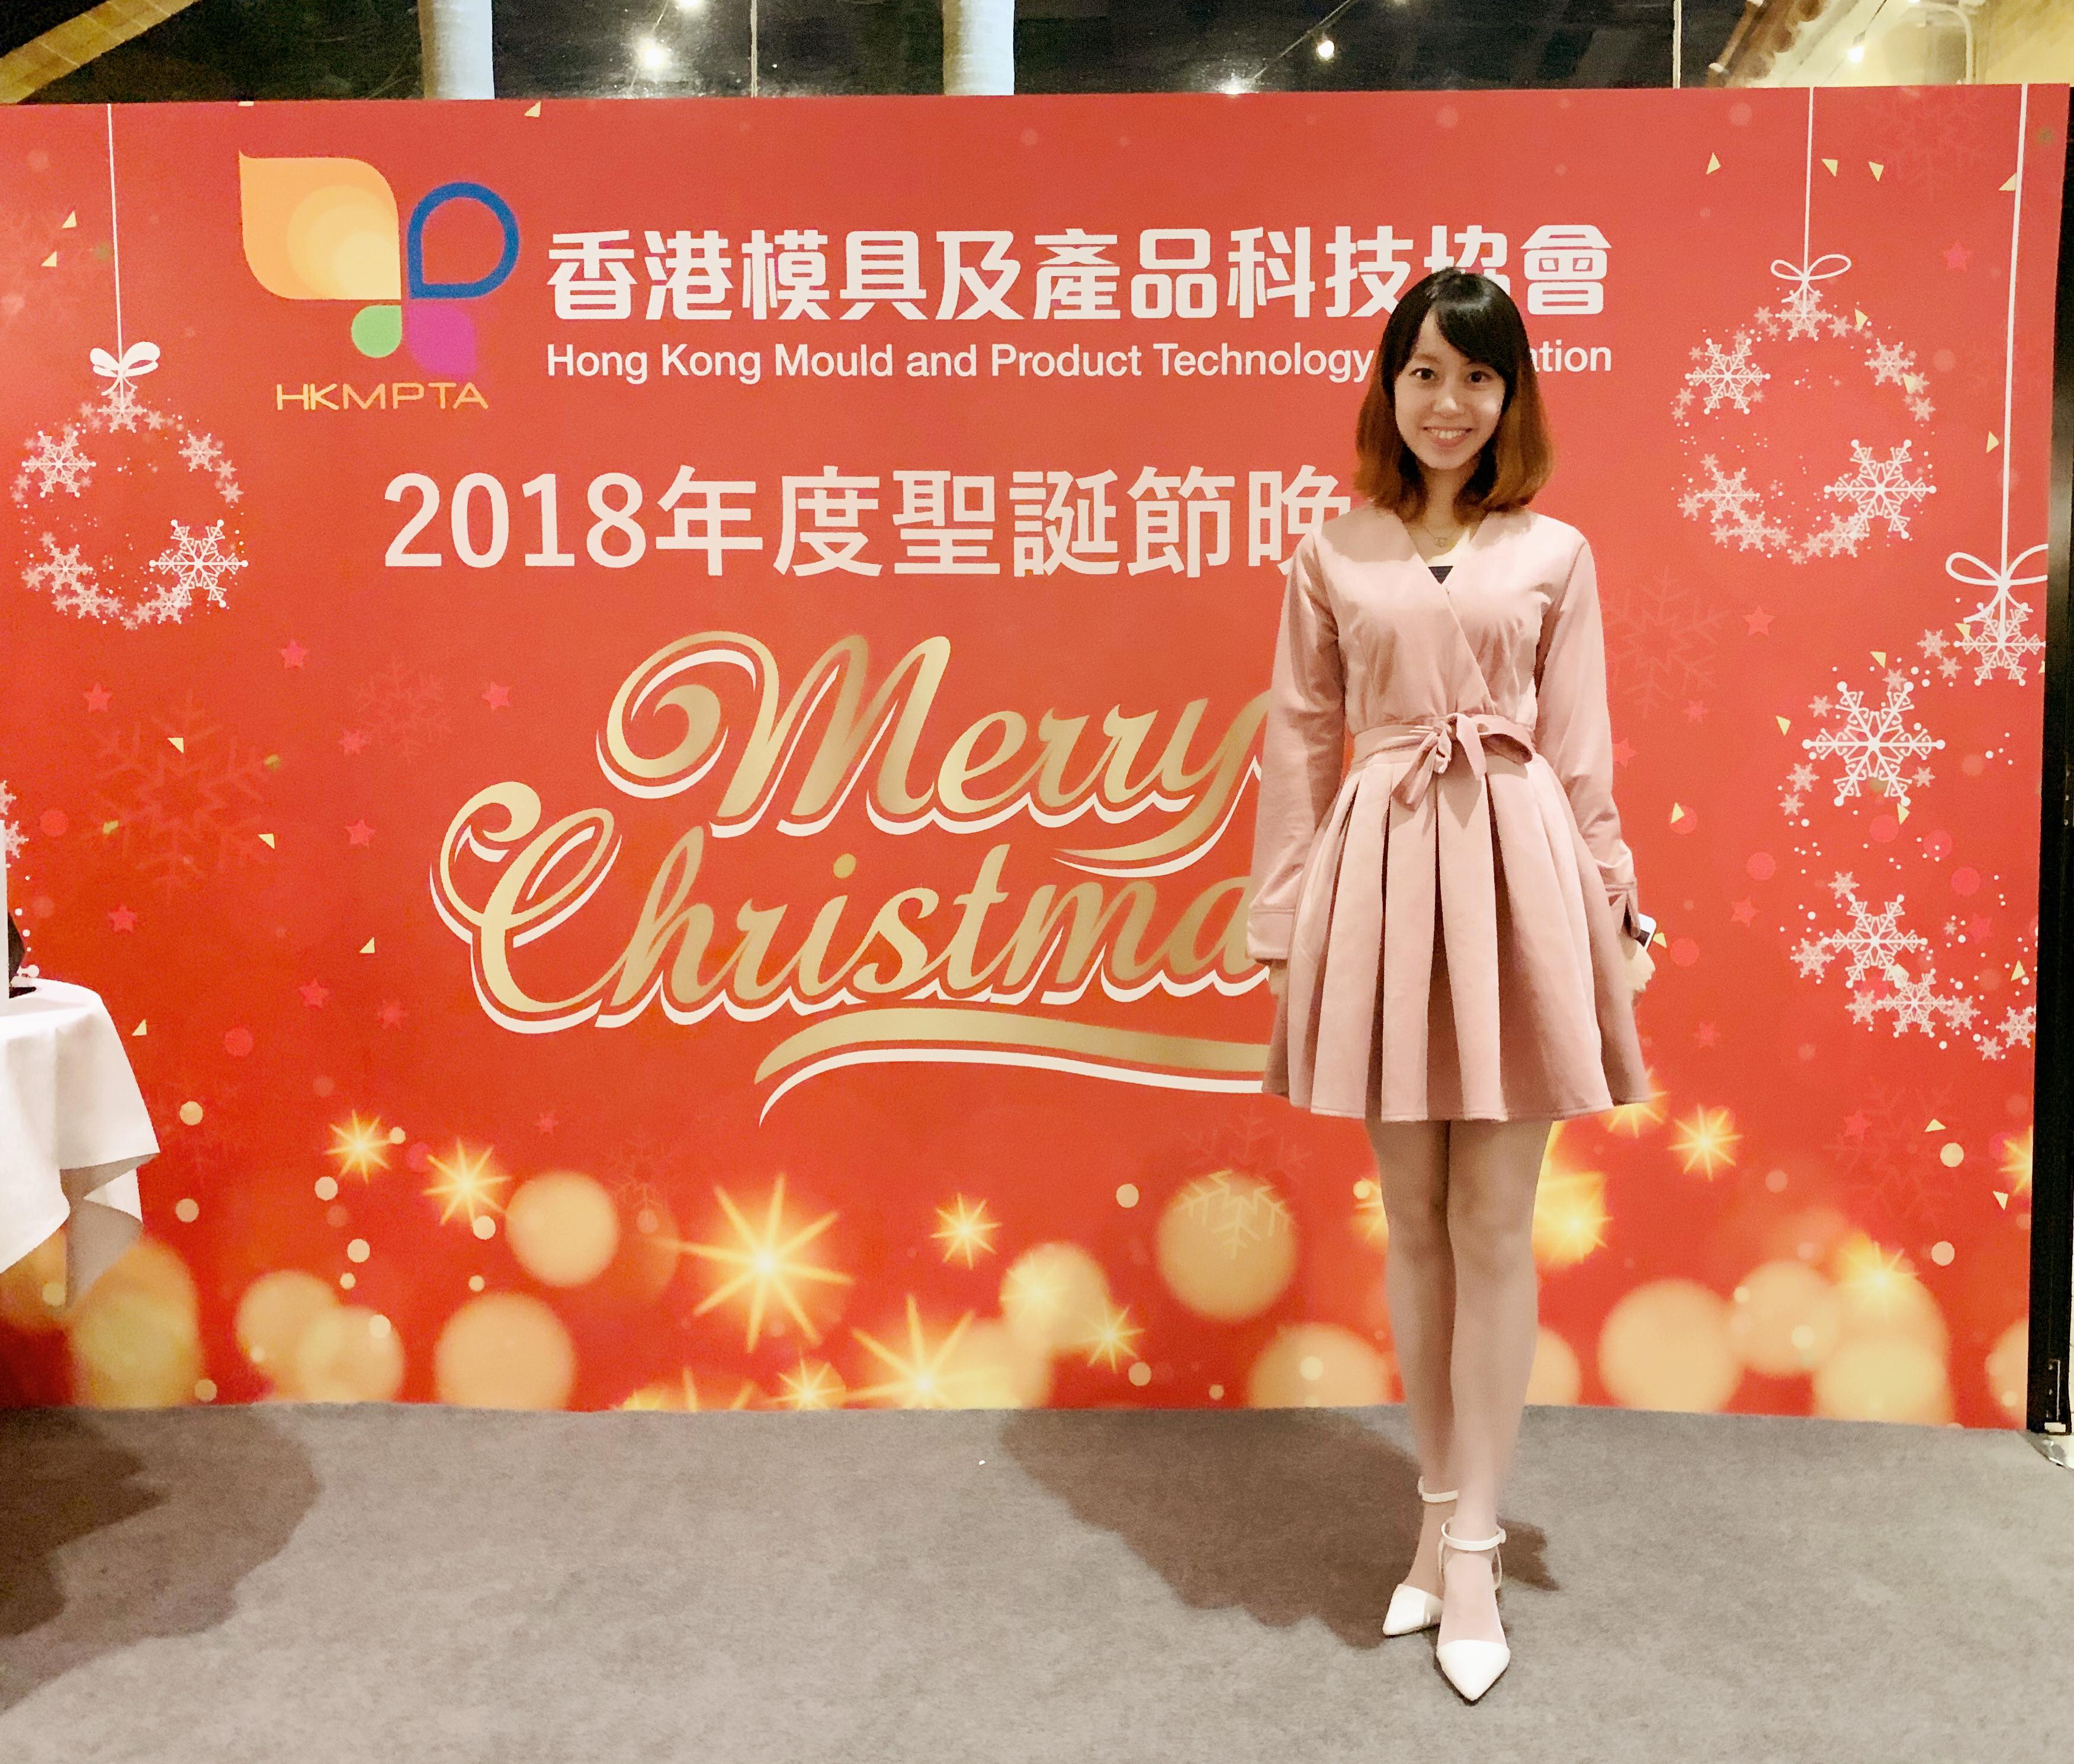 VIVIAN 曾子晴司儀工作紀錄: 香港模具及產品科技協會2018年度聖誕晚會活動主持